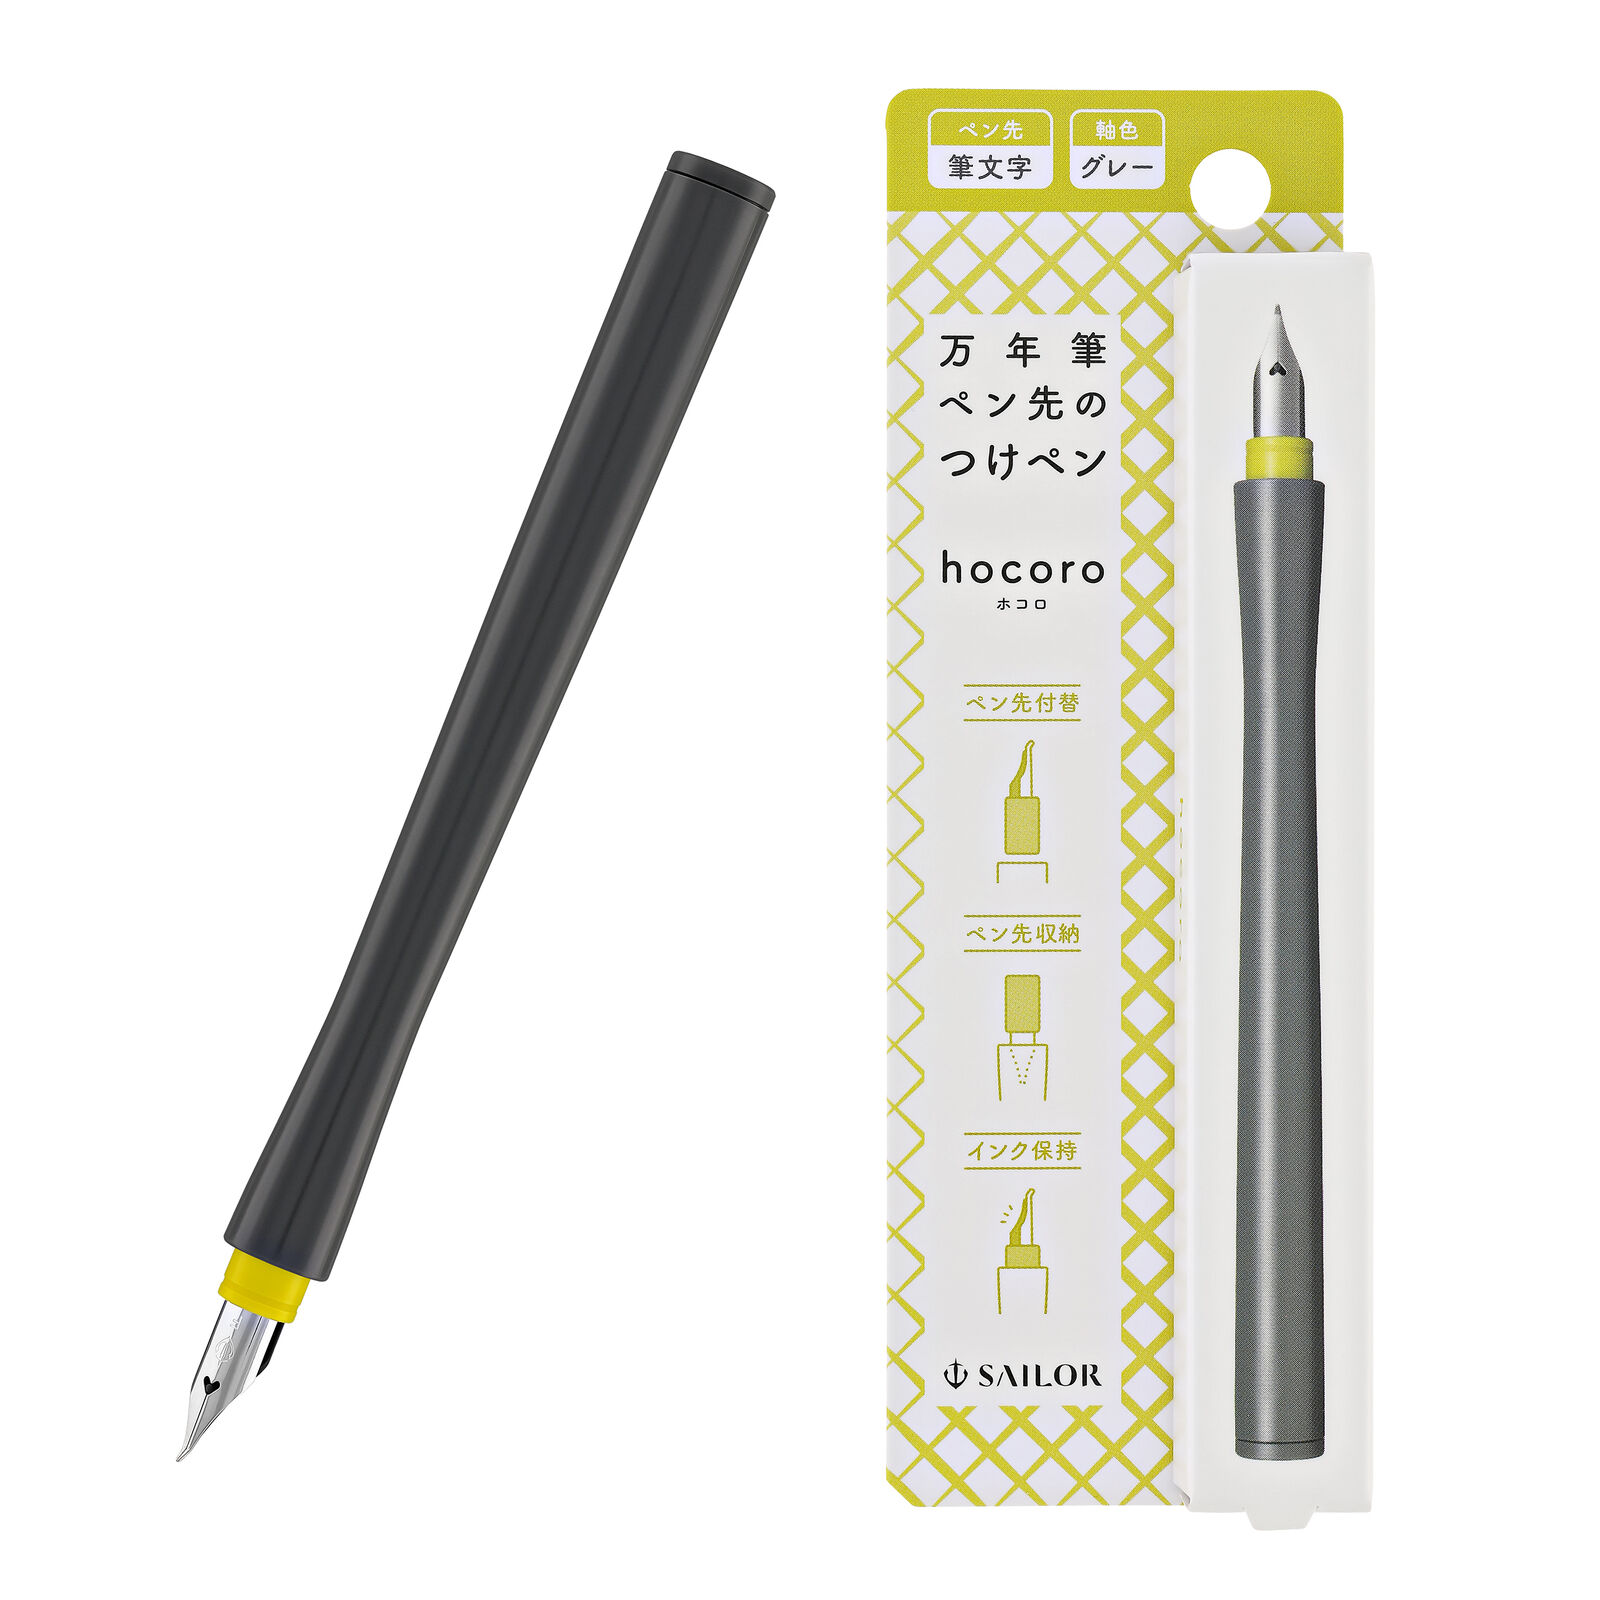 Sailor Compass Hocoro Dip Pen in Gray with Yellow - Fude Nib - NEW